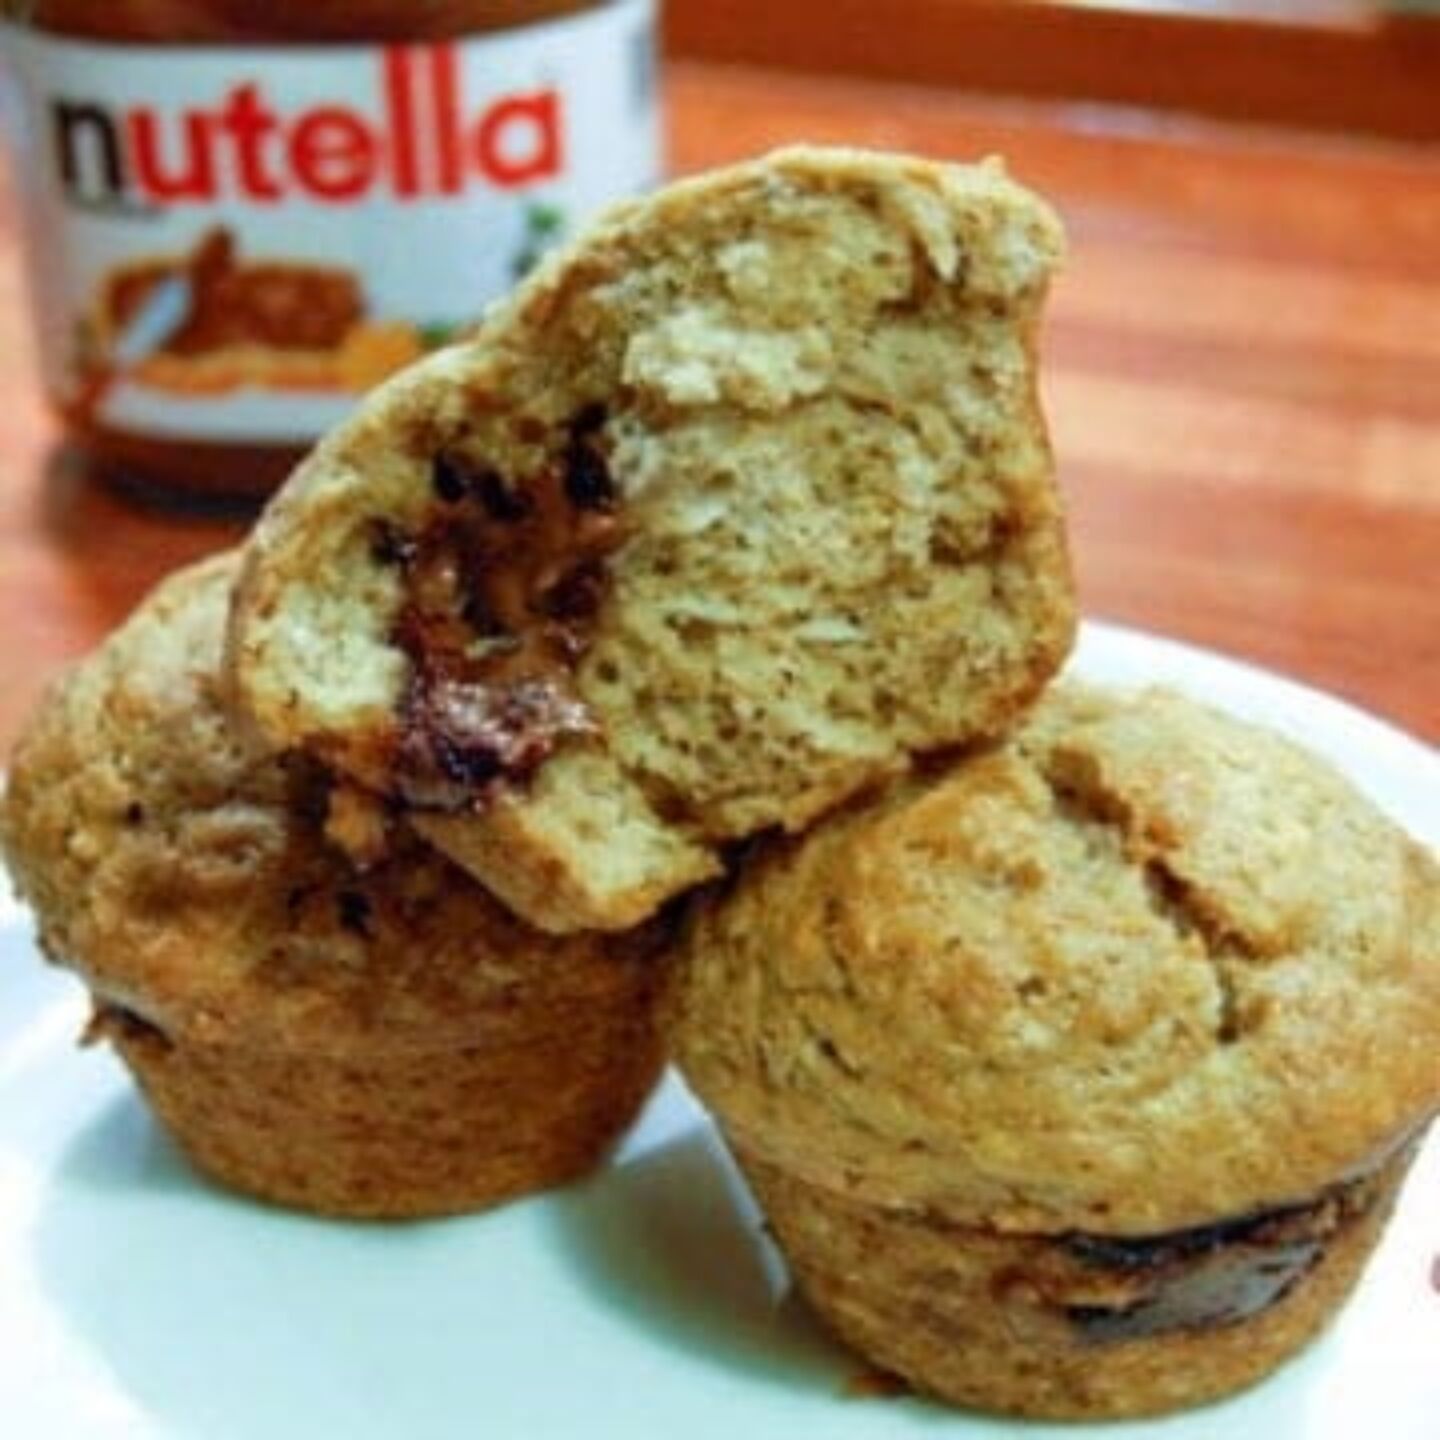 Nutella-stuffed banana bread muffins